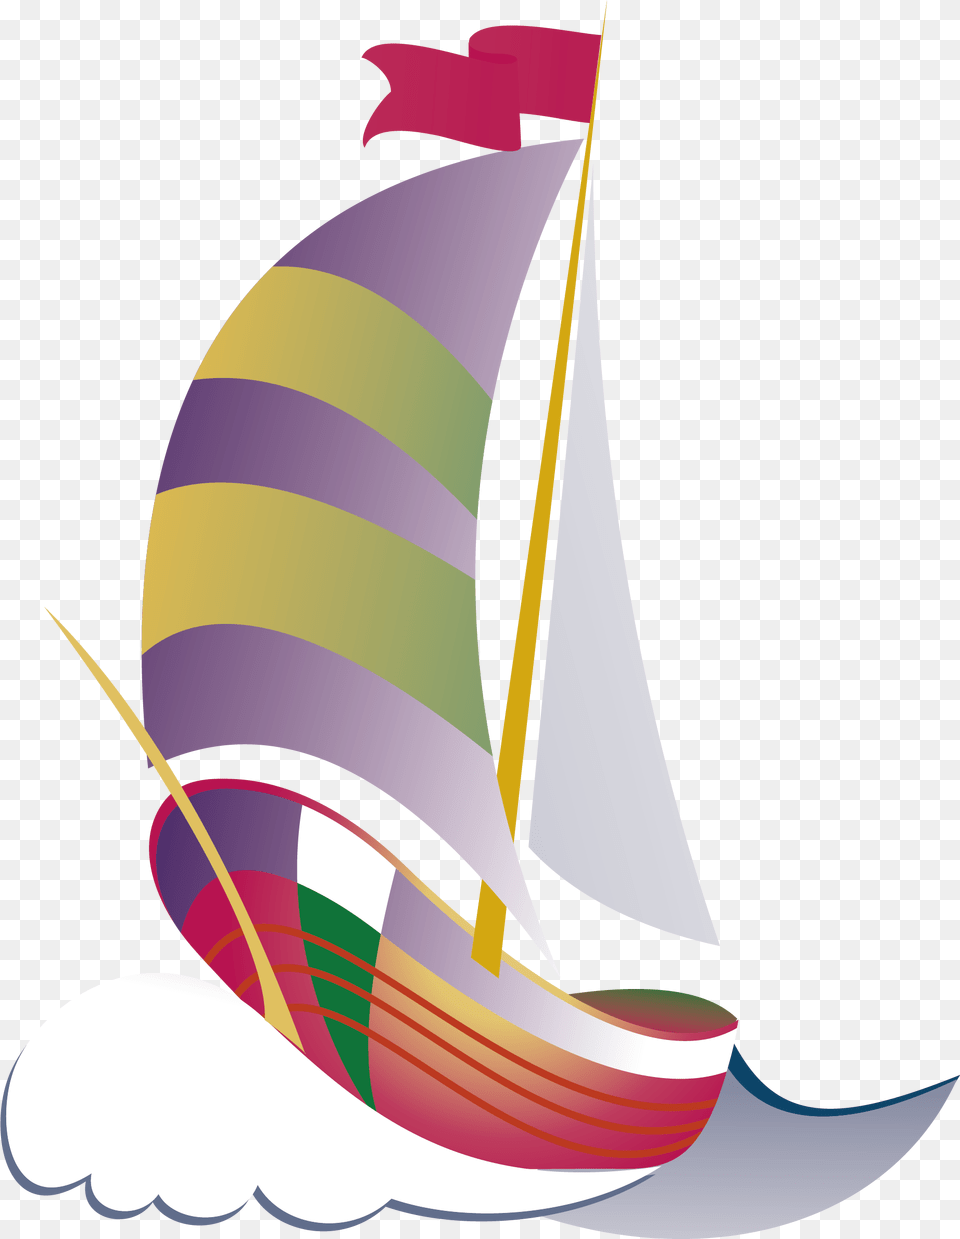 Sailing Ship Graphic Design Illustration Graphics Of Sailboat, Boat, Transportation, Vehicle, Watercraft Png Image